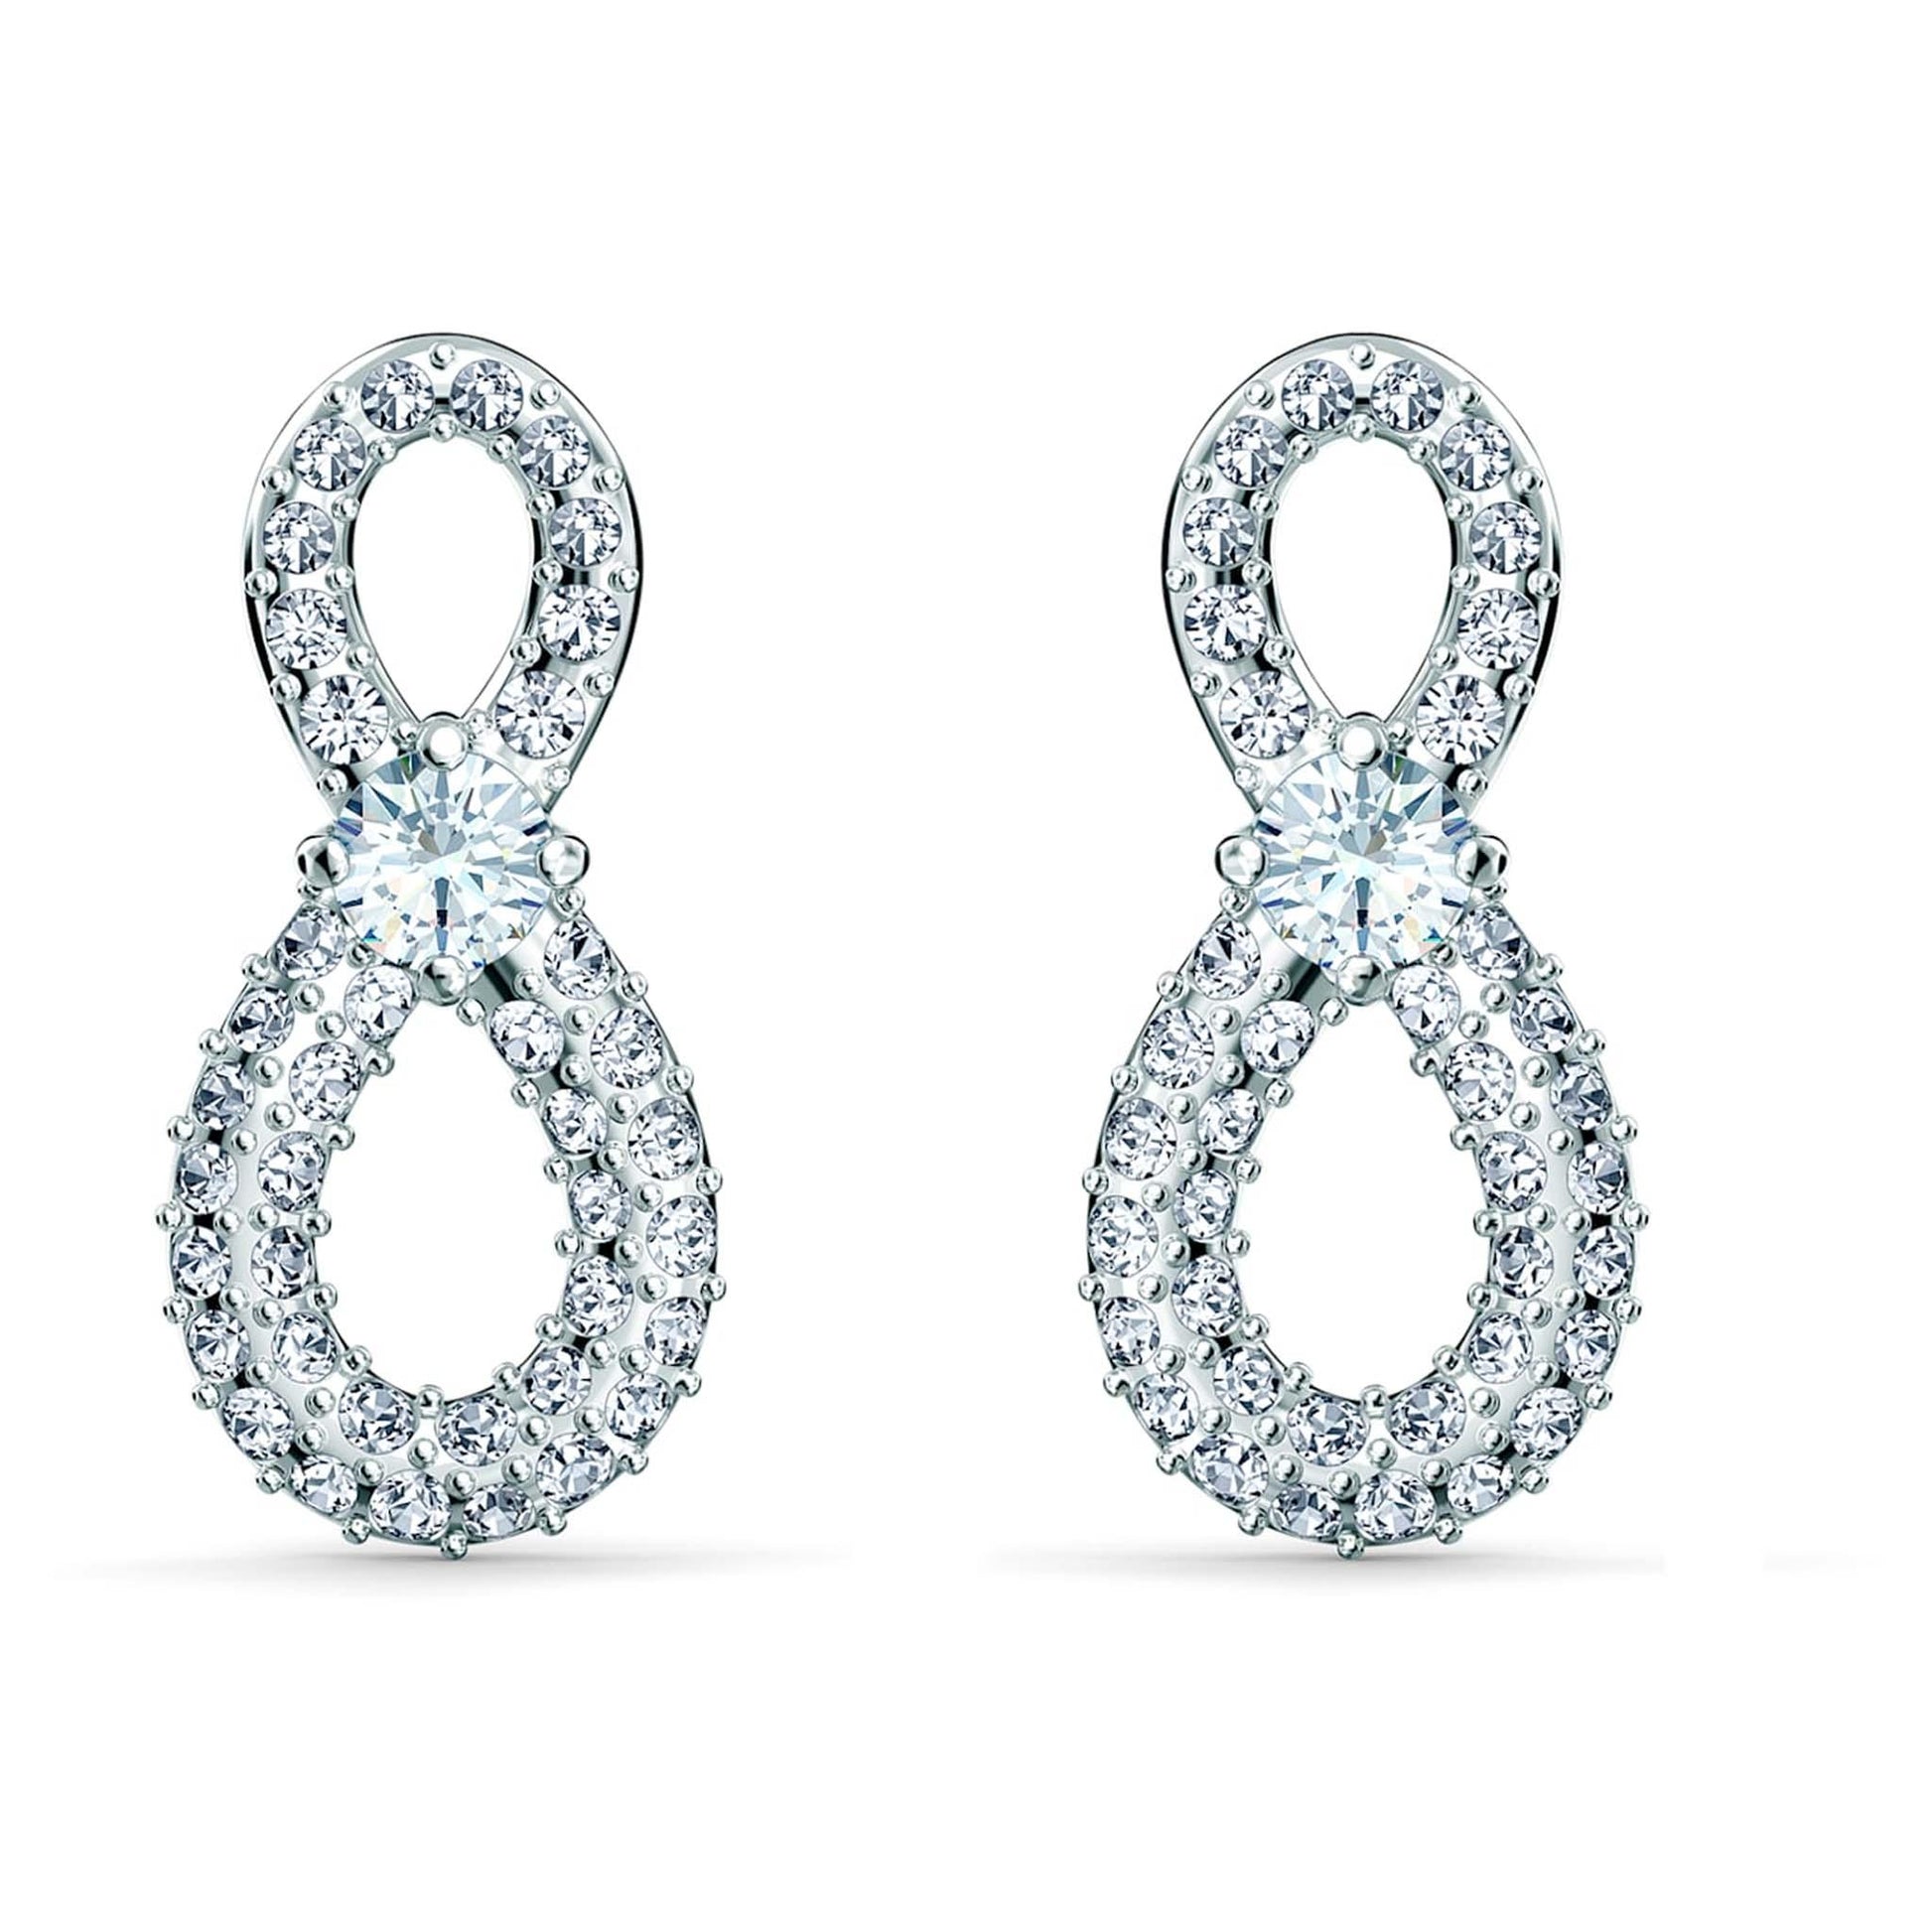 Swarovski Infinity earrings - Cosmos Boutique New Jersey